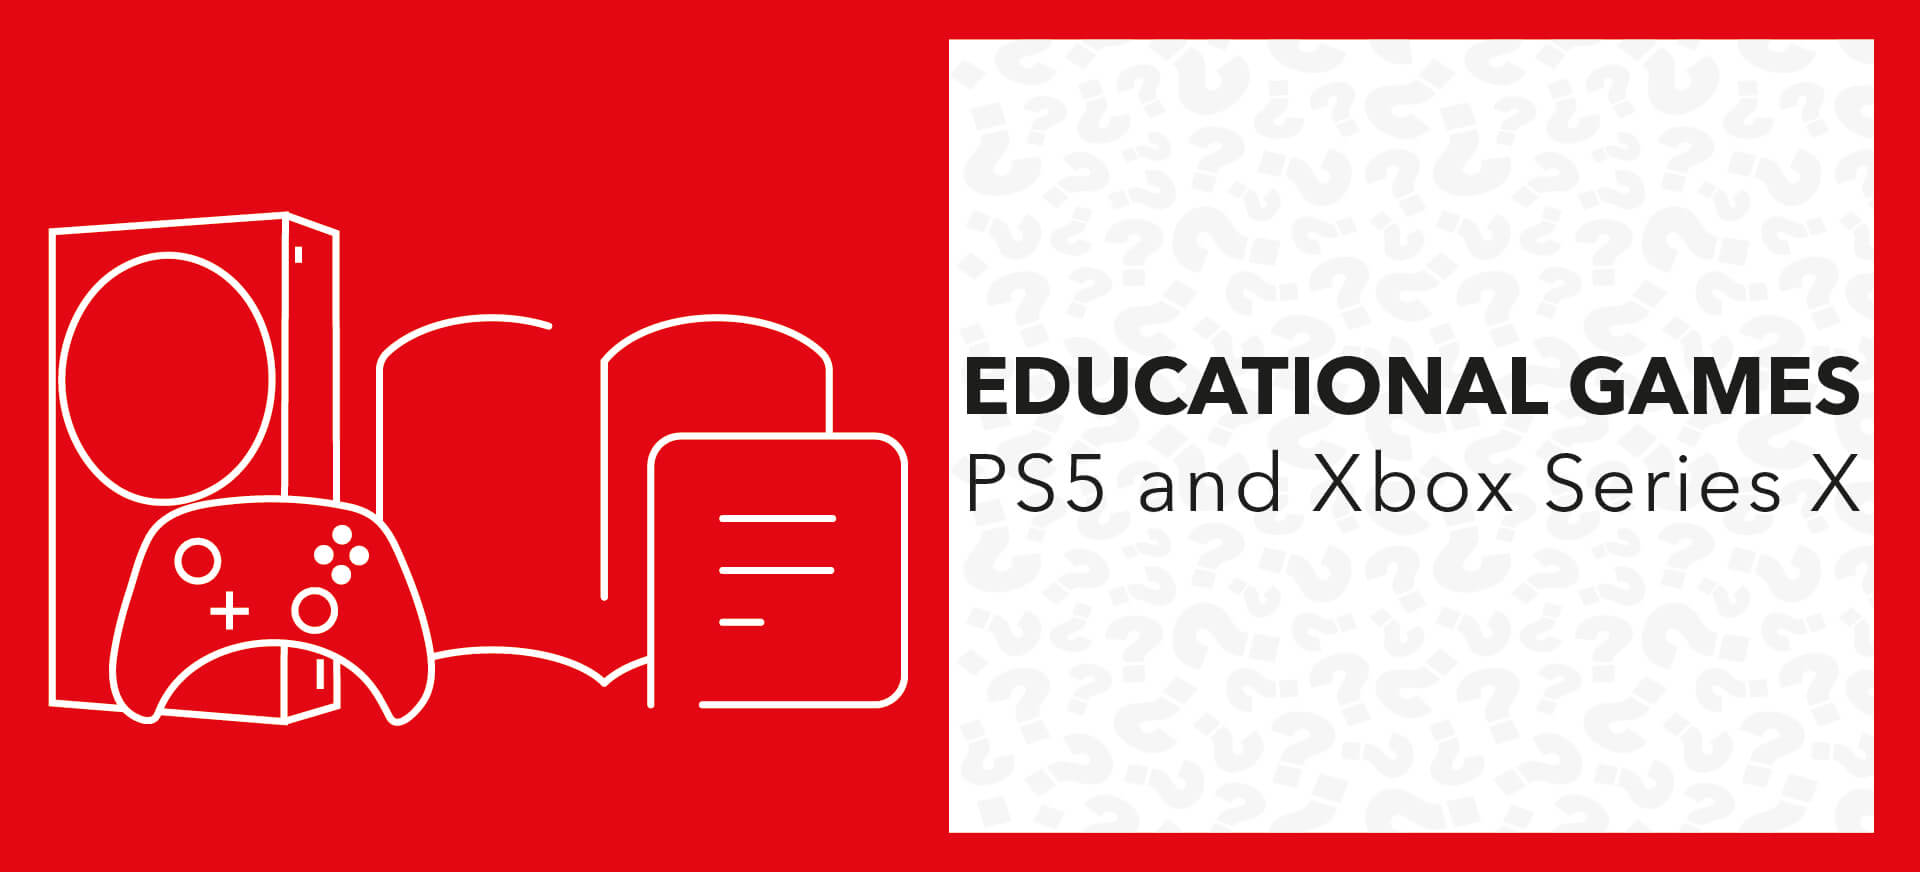 xbox playstation ps4 ps5 nintendo: Black Friday sale 2023 on Xbox,  PlayStation PS4, PS5, Nintendo. What we know so far - The Economic Times